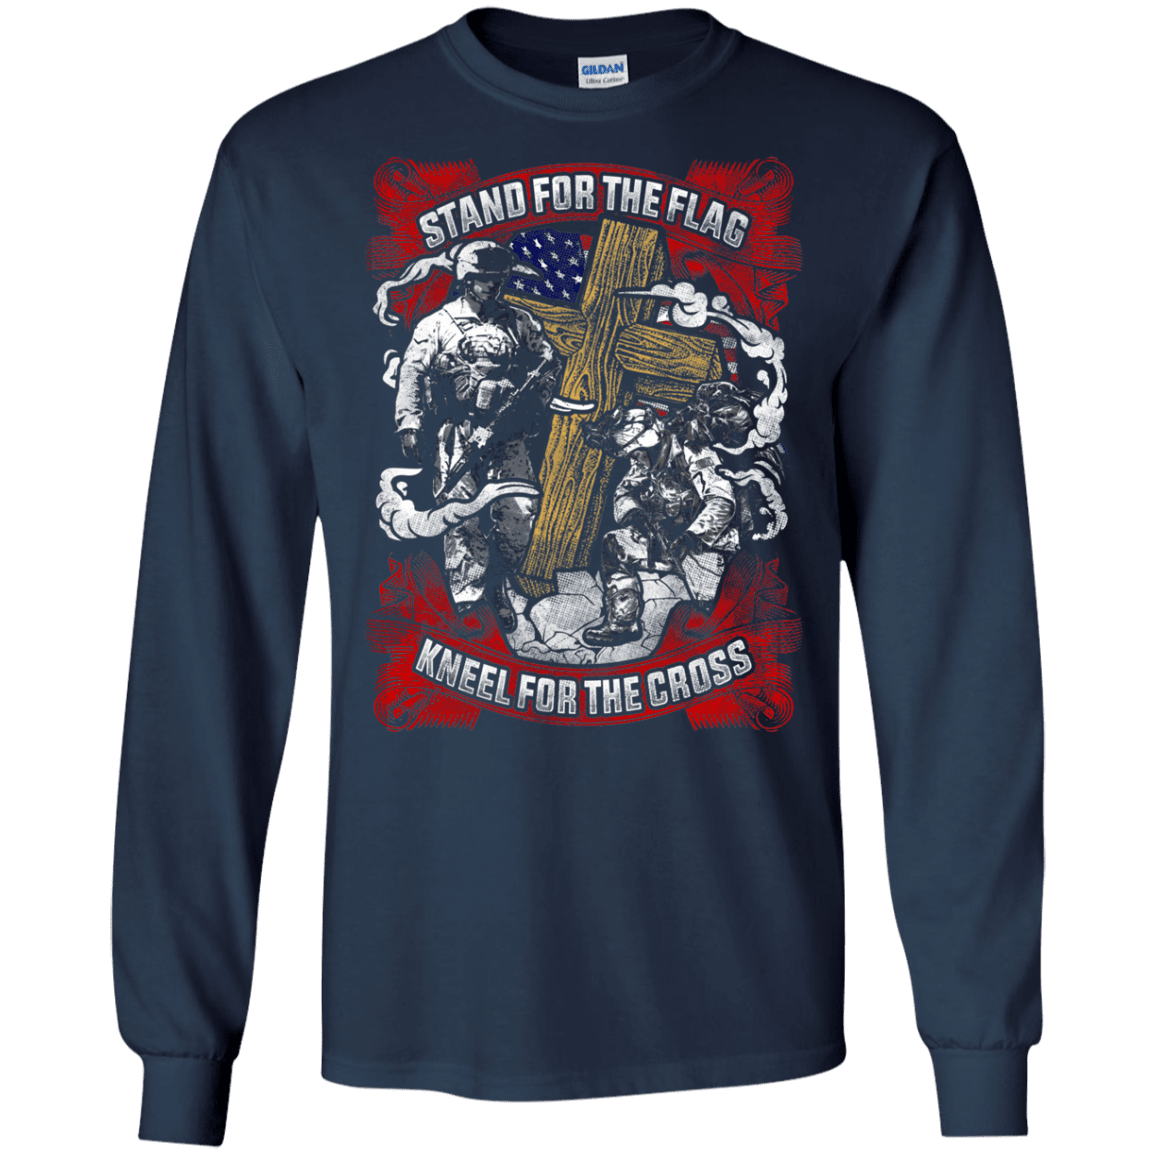 Military T-Shirt "Stand For the Flag Kneel For The Cross Men" Front-TShirt-General-Veterans Nation